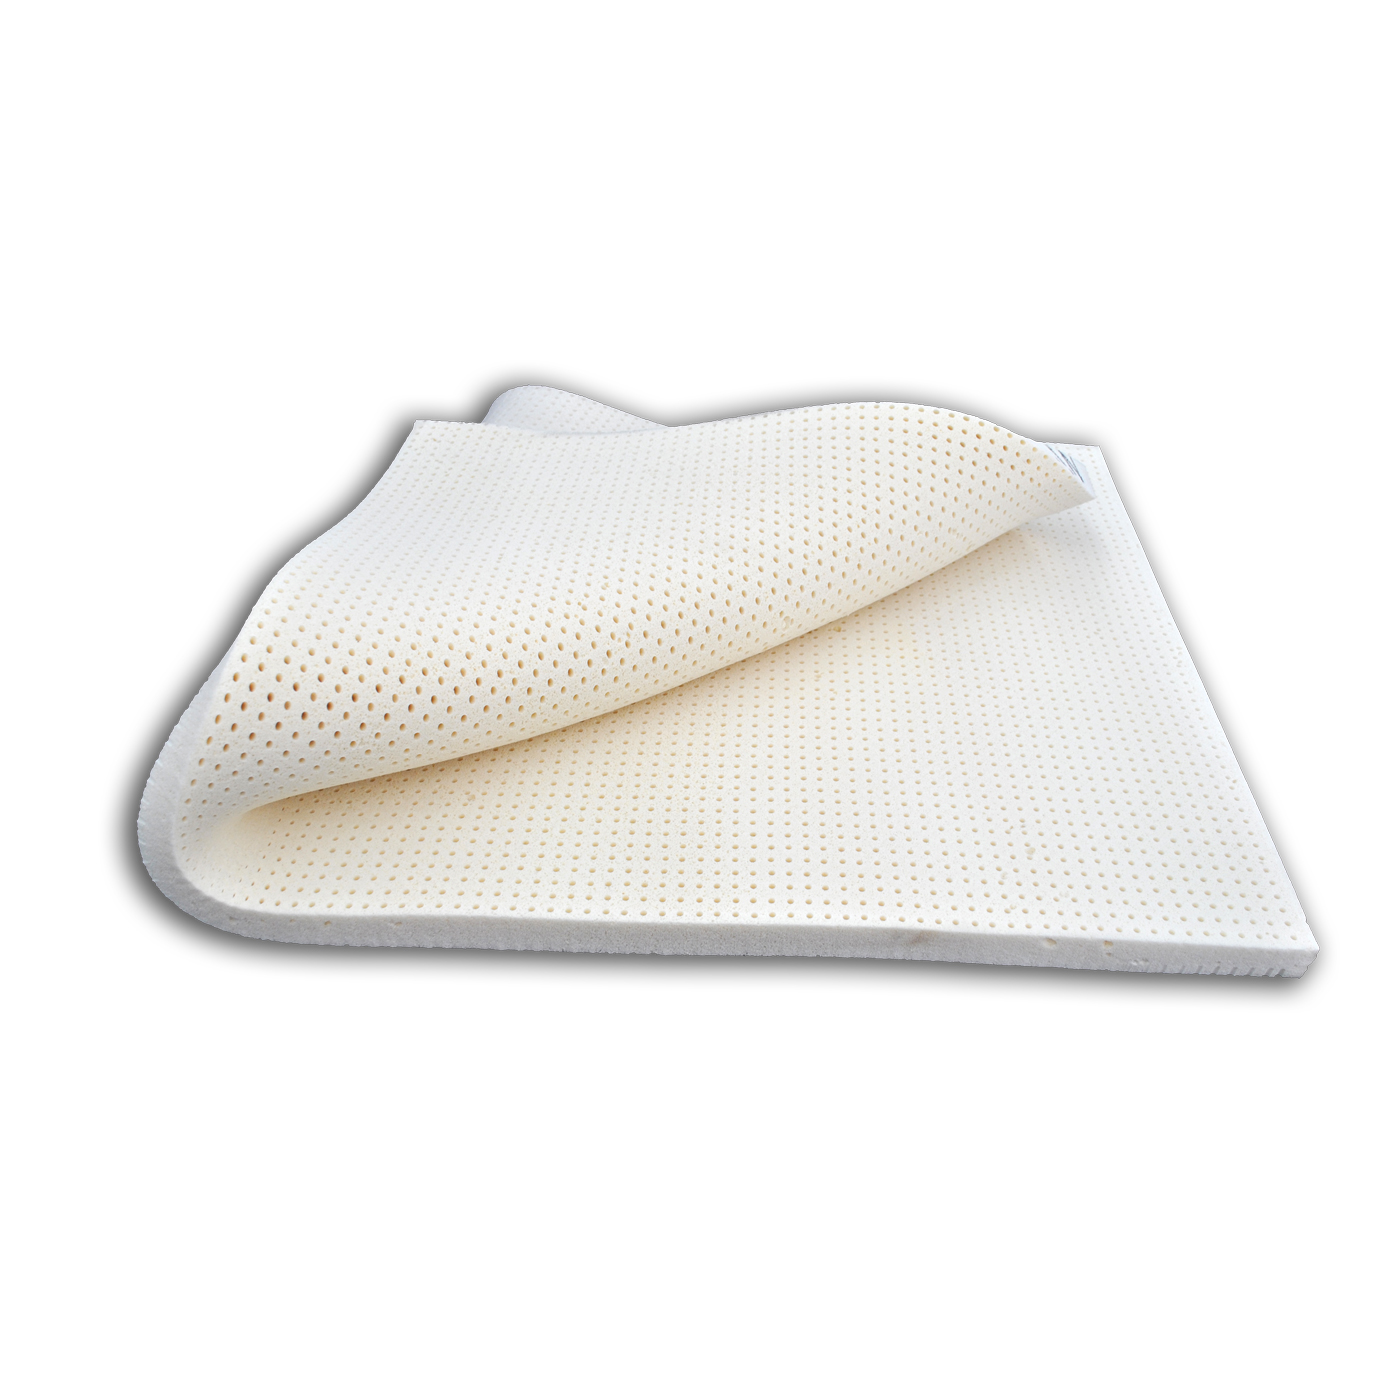 latex foam pad topper mattress Natural